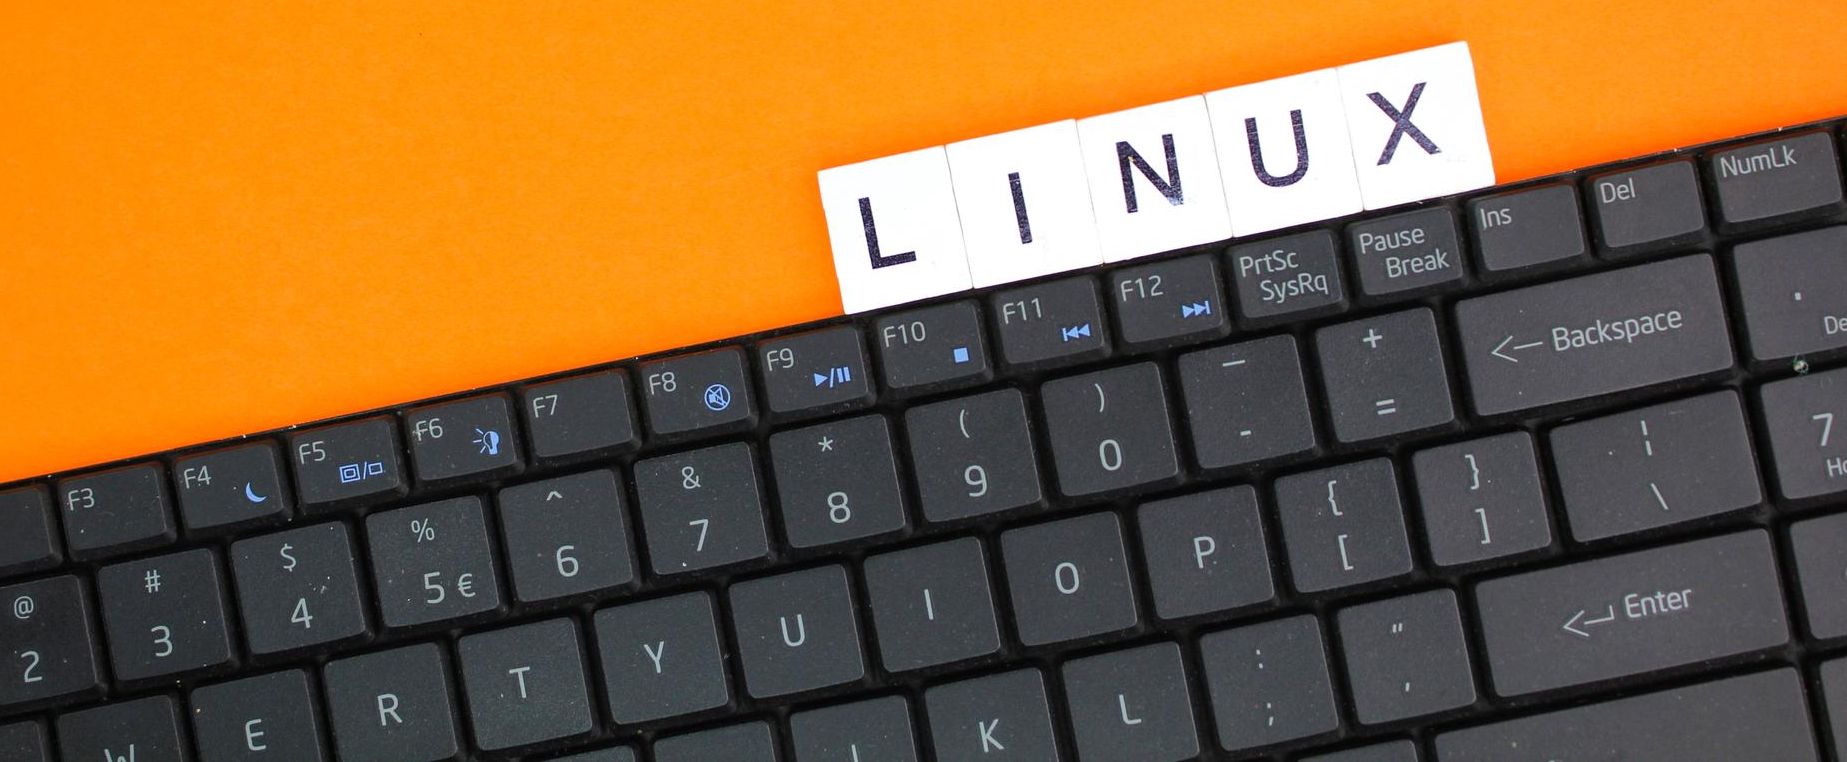 linux ecs optimized